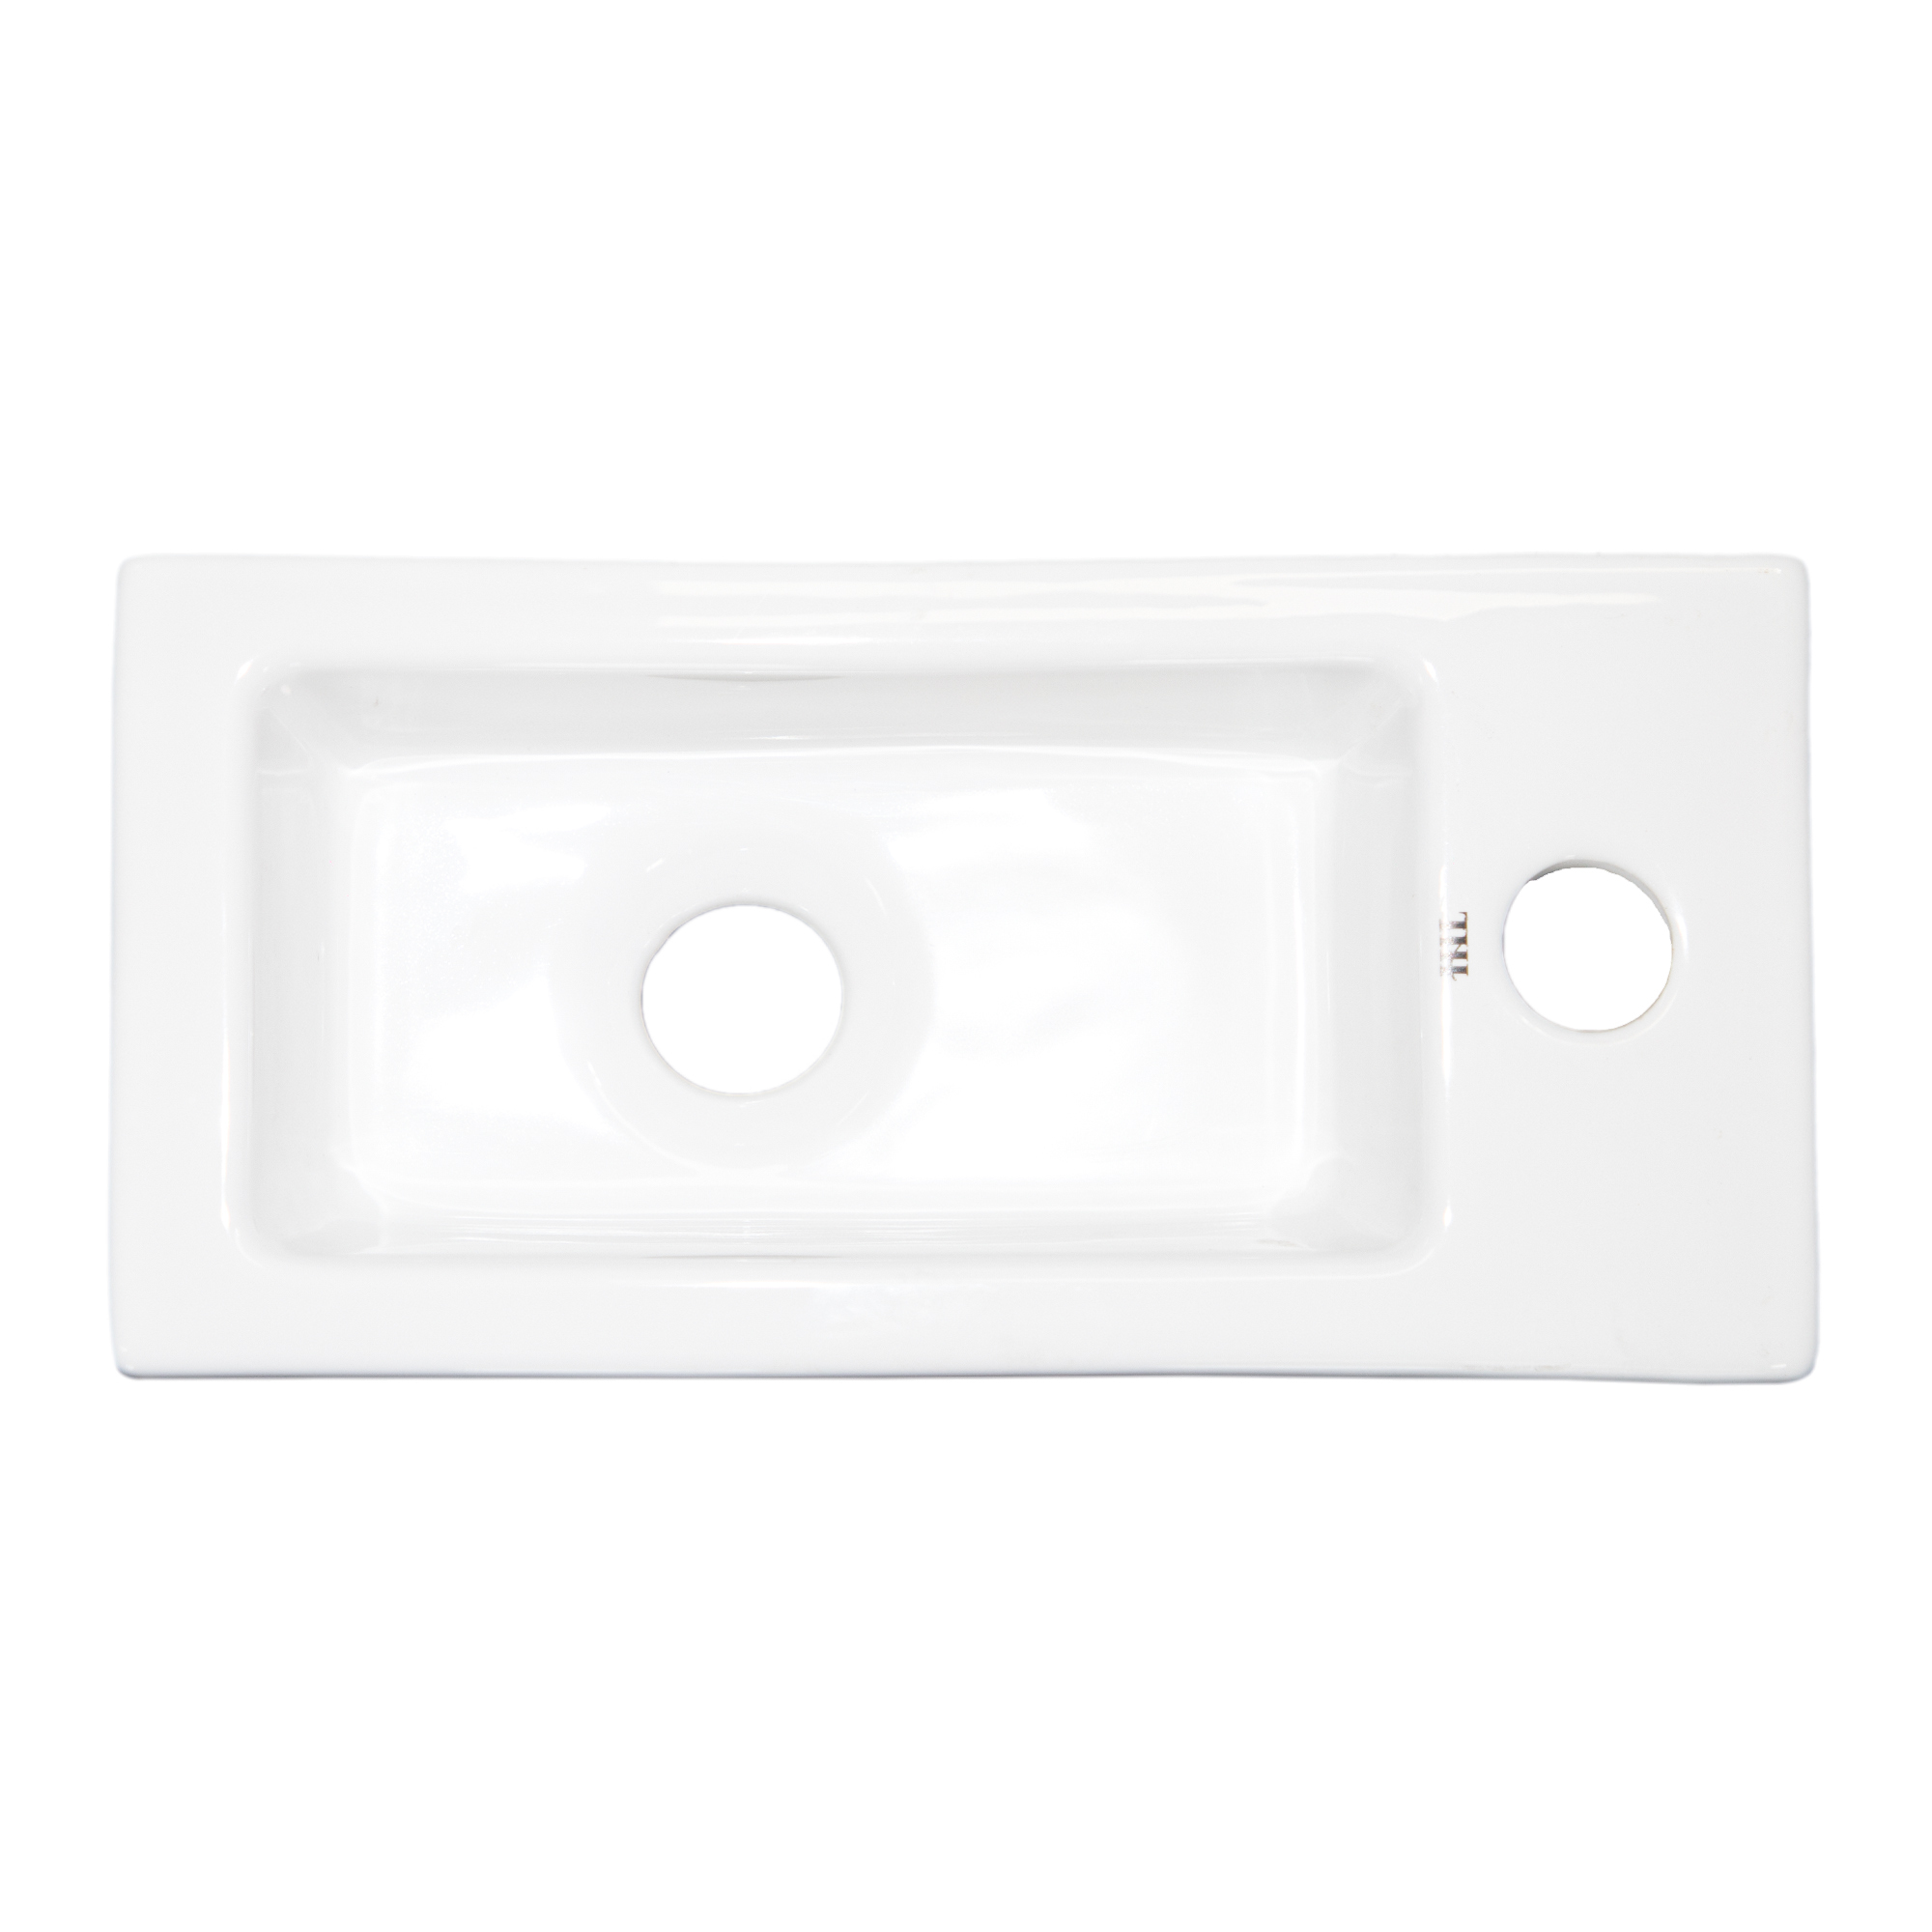 THH Above Counter Ceramic Bathroom Basin White 370 x 180 x 90mm